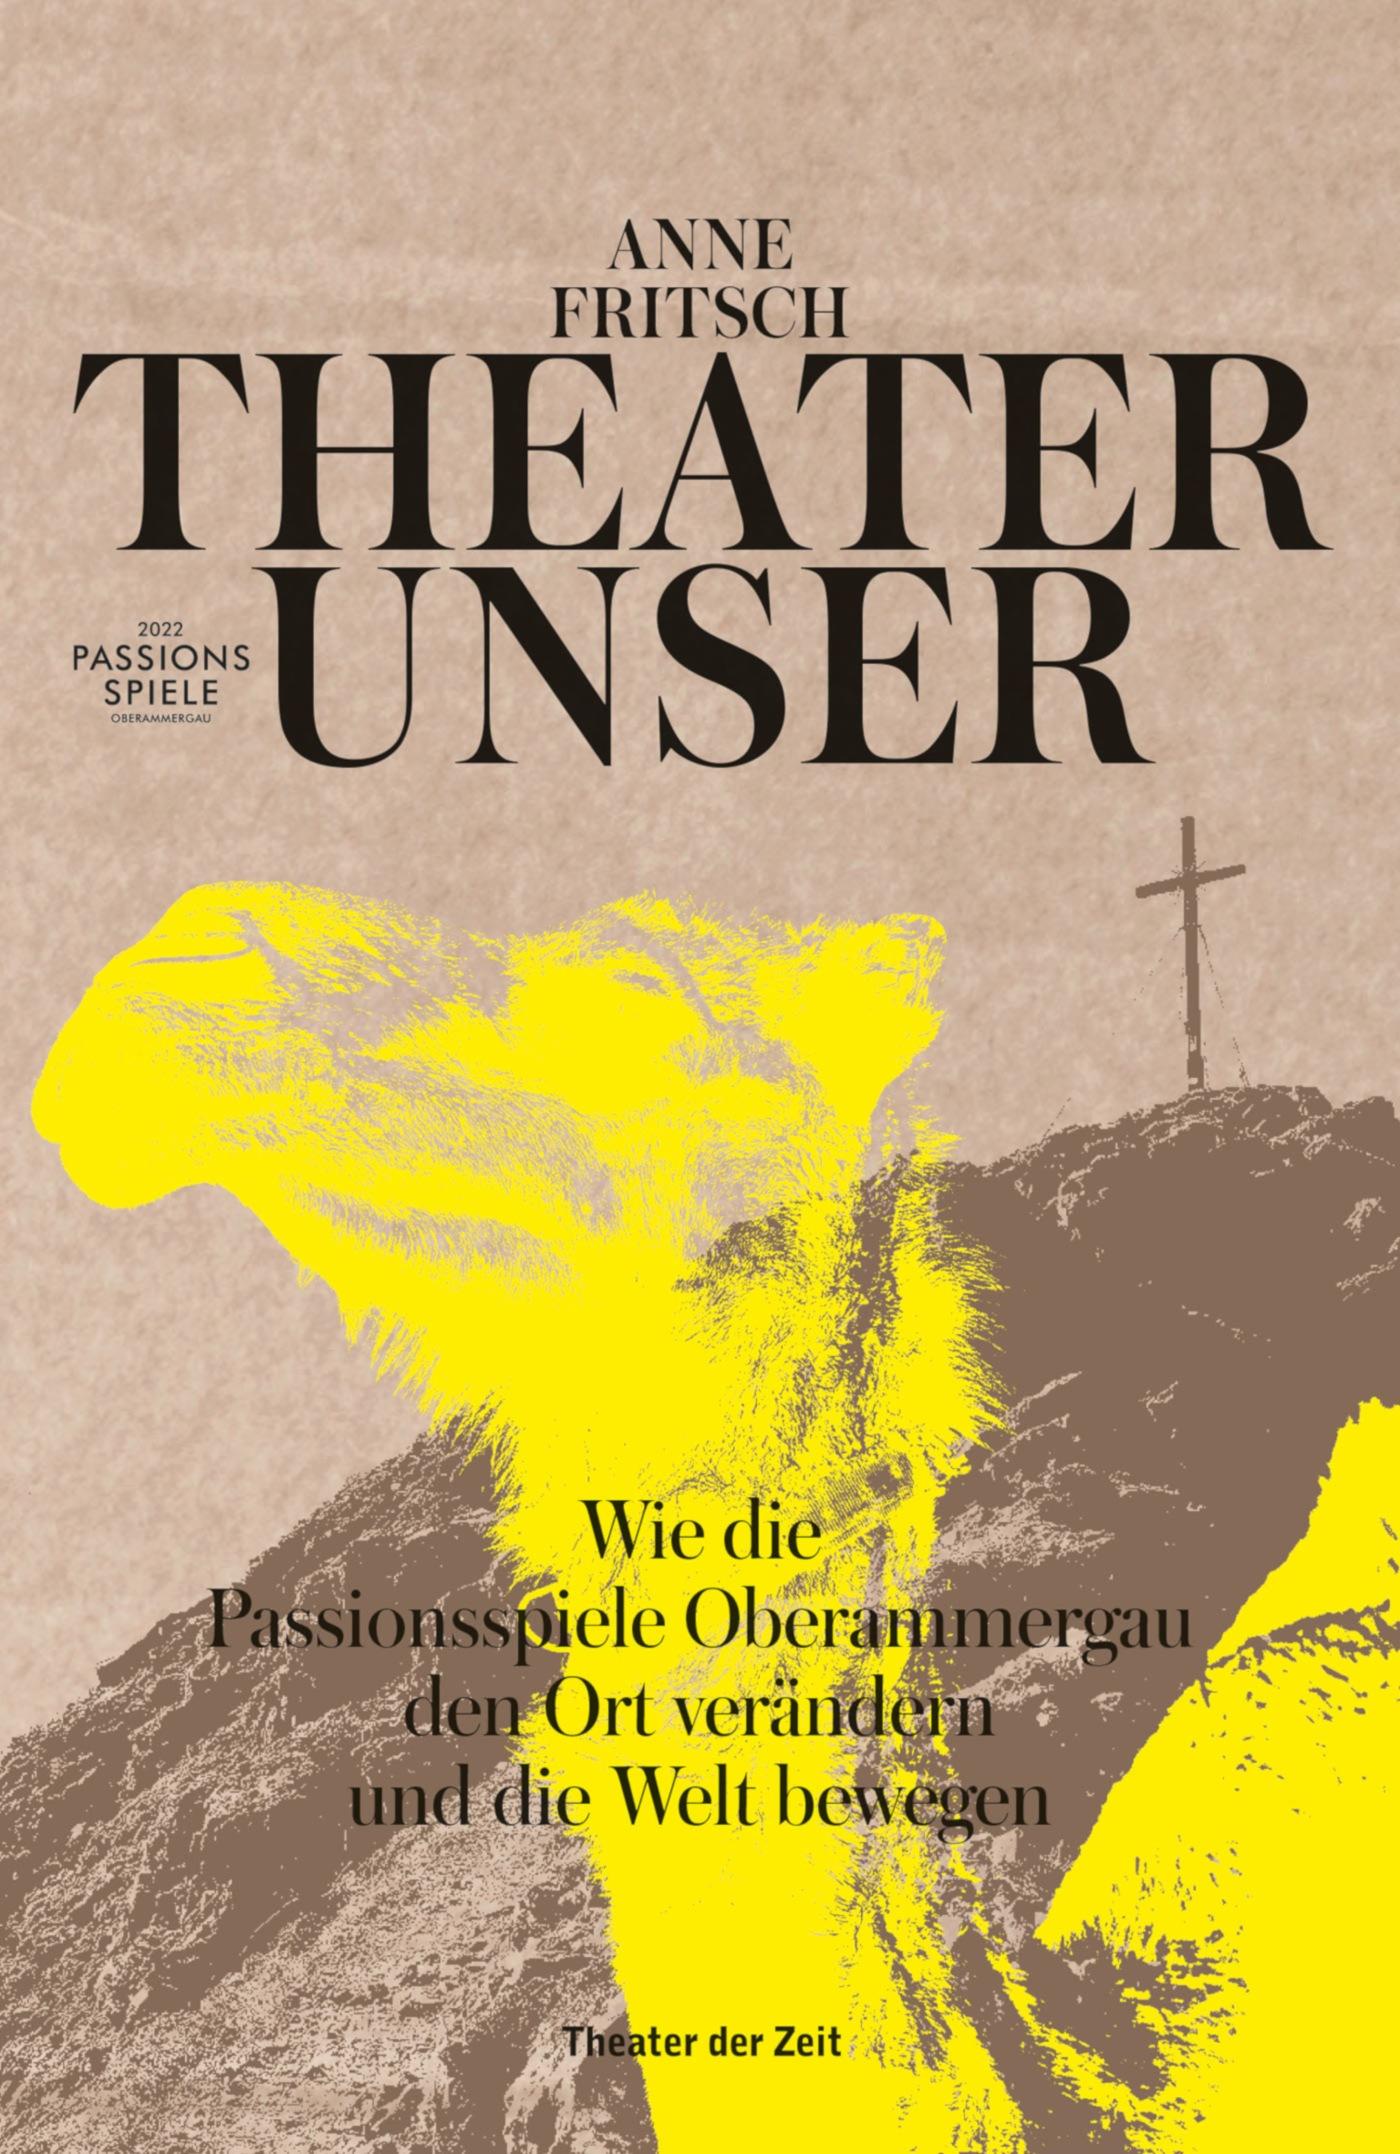 "Theater unser"